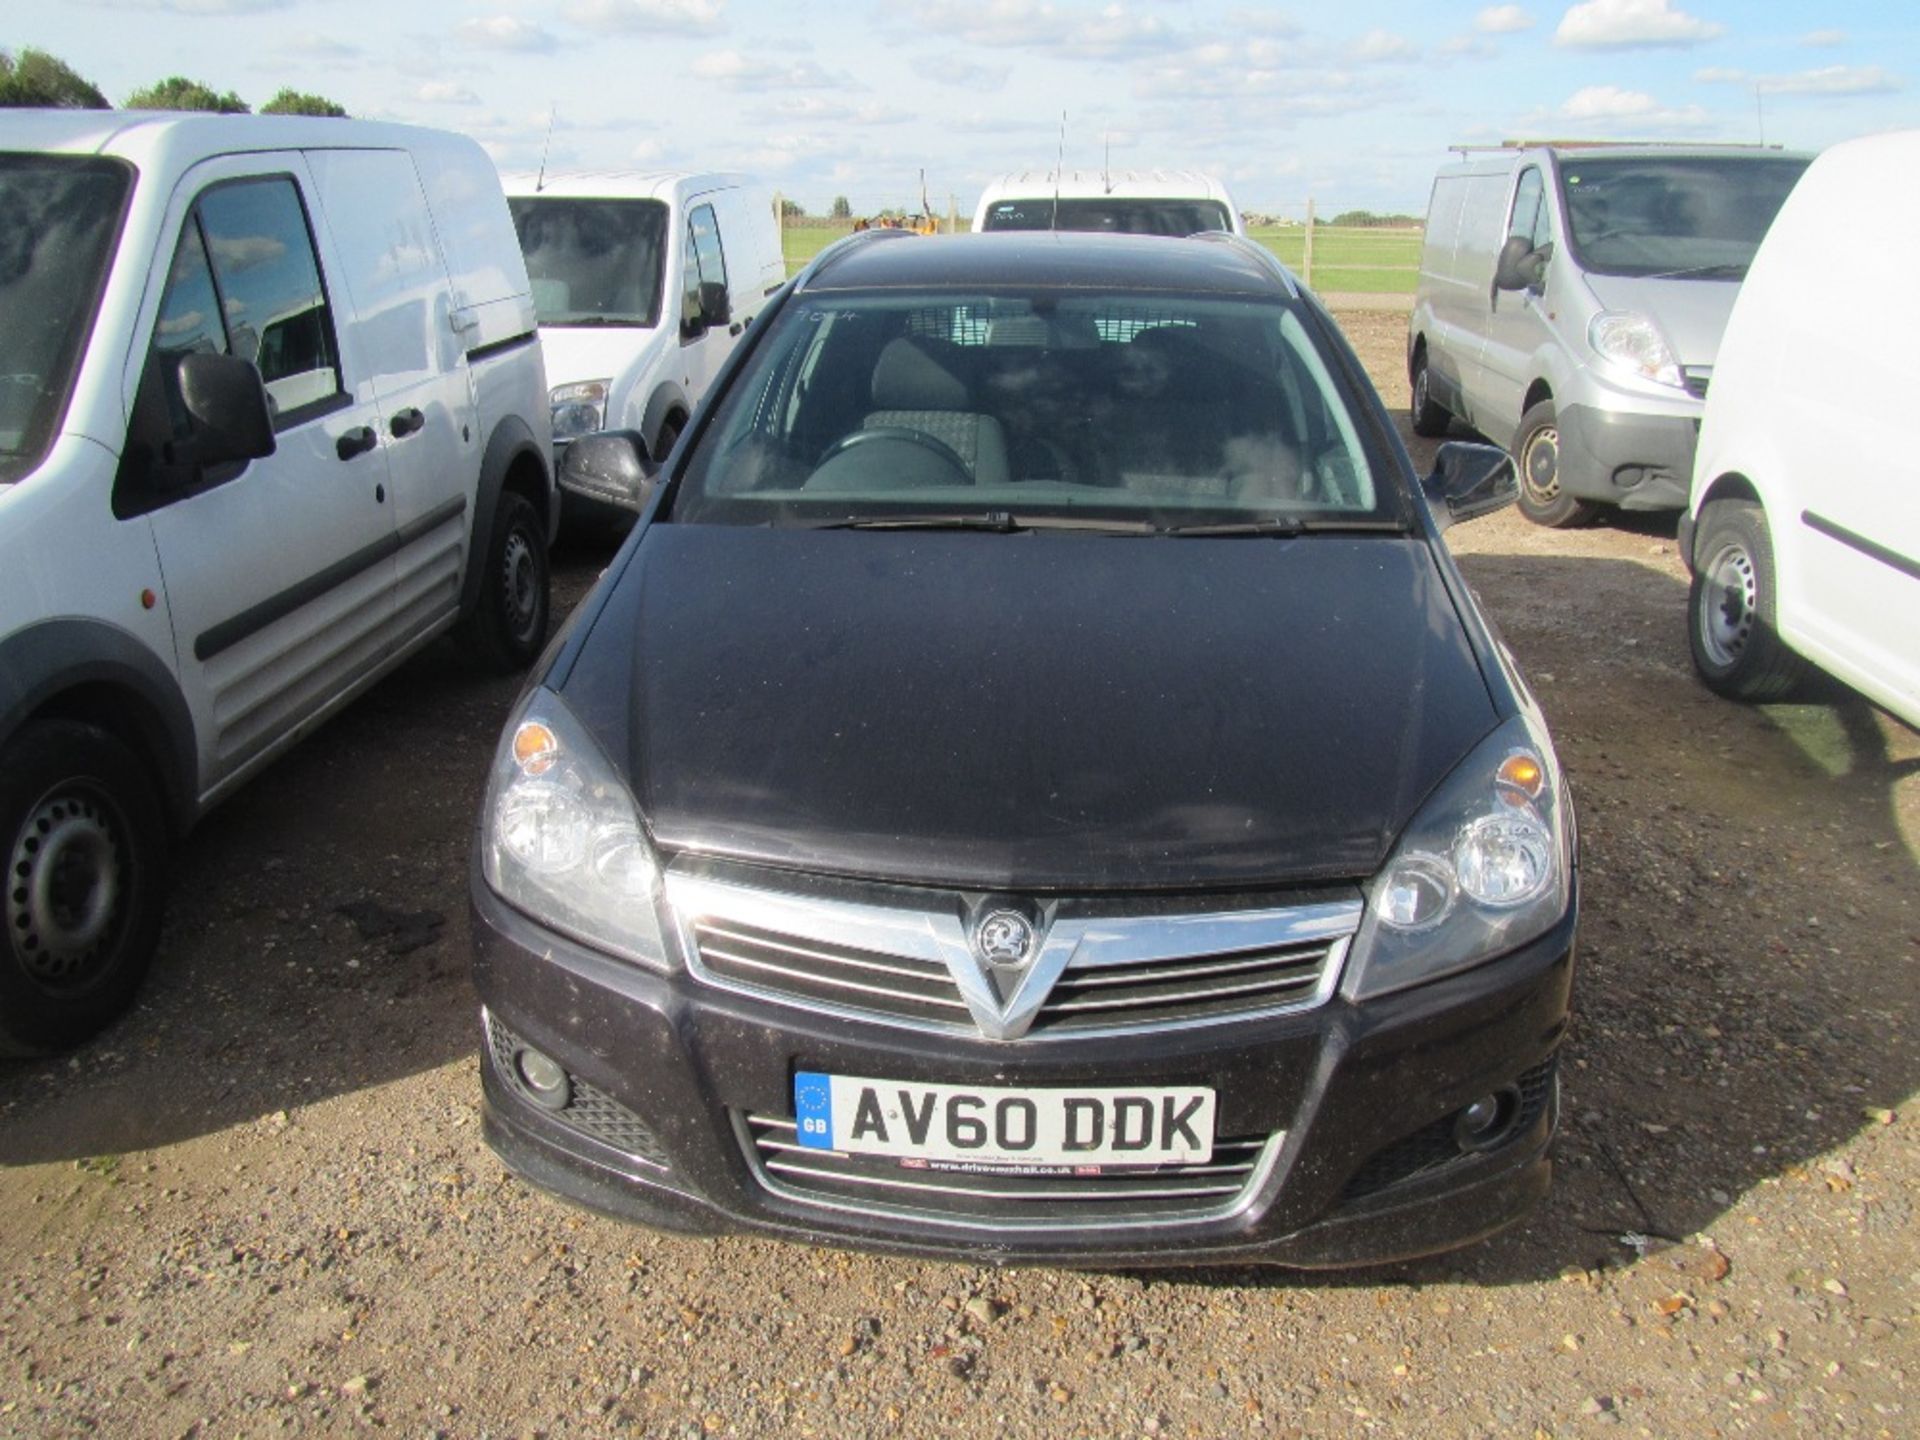 2011 Vauxhall Astra Sportive SE CDTI 1.9 Diesel Van Manual (damage to rear door) Mileage: 67,274 MOT - Image 2 of 5